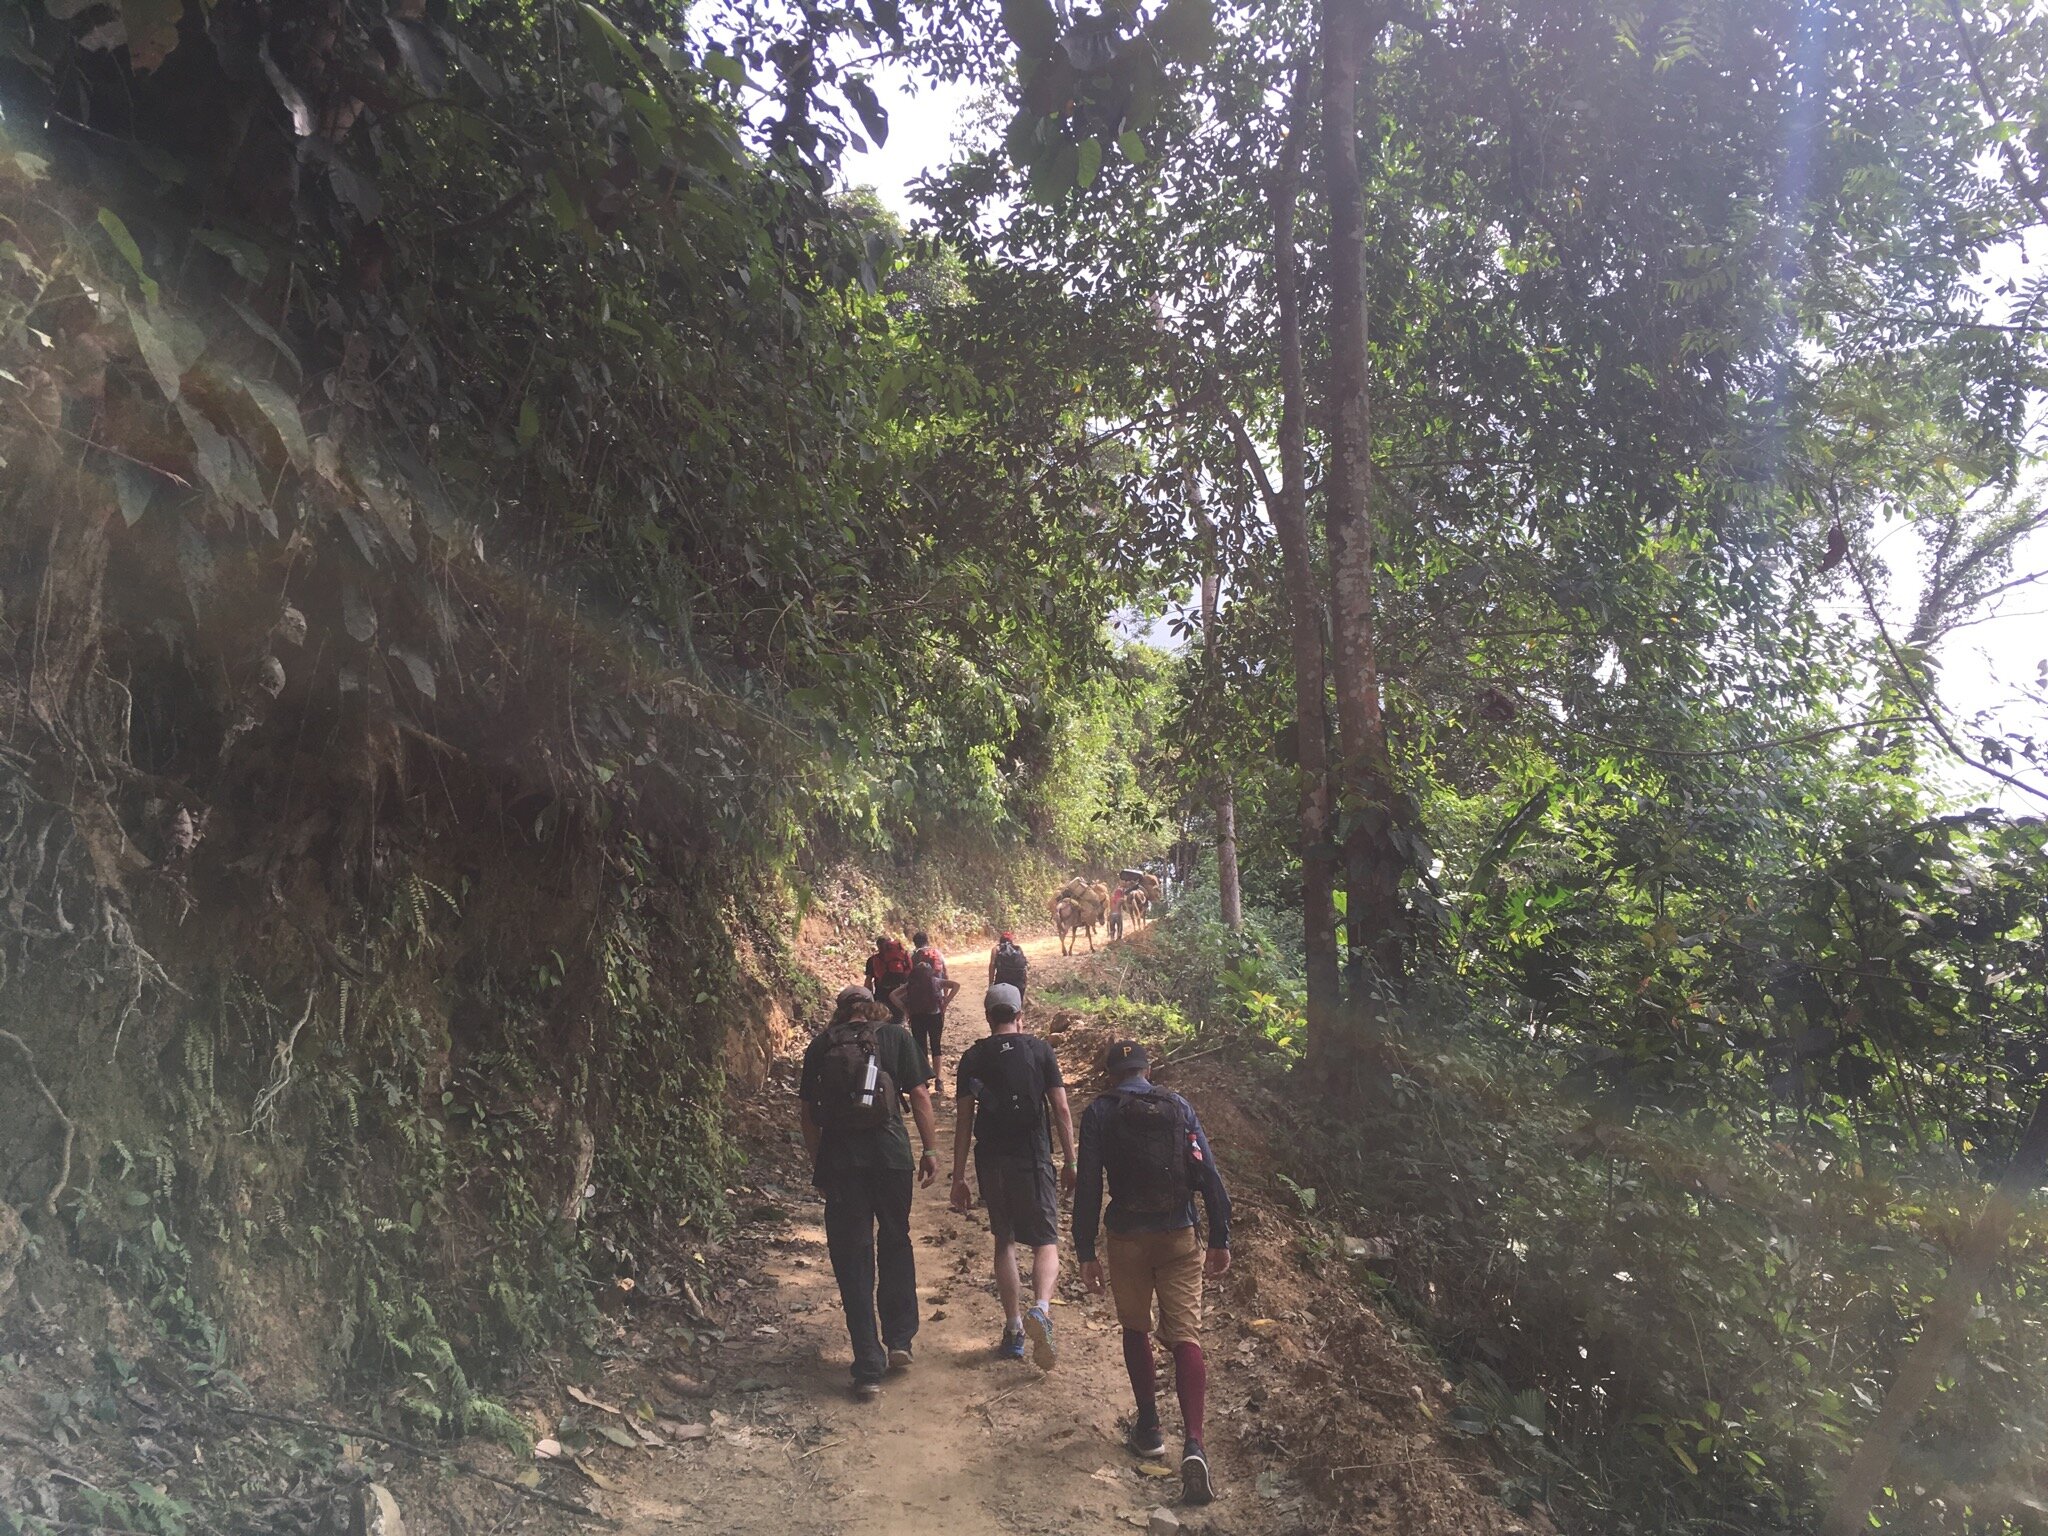 Globetrot Serot Travel Blog: Best Multi Day Hikes In South America – Ciudad Perdida Trek